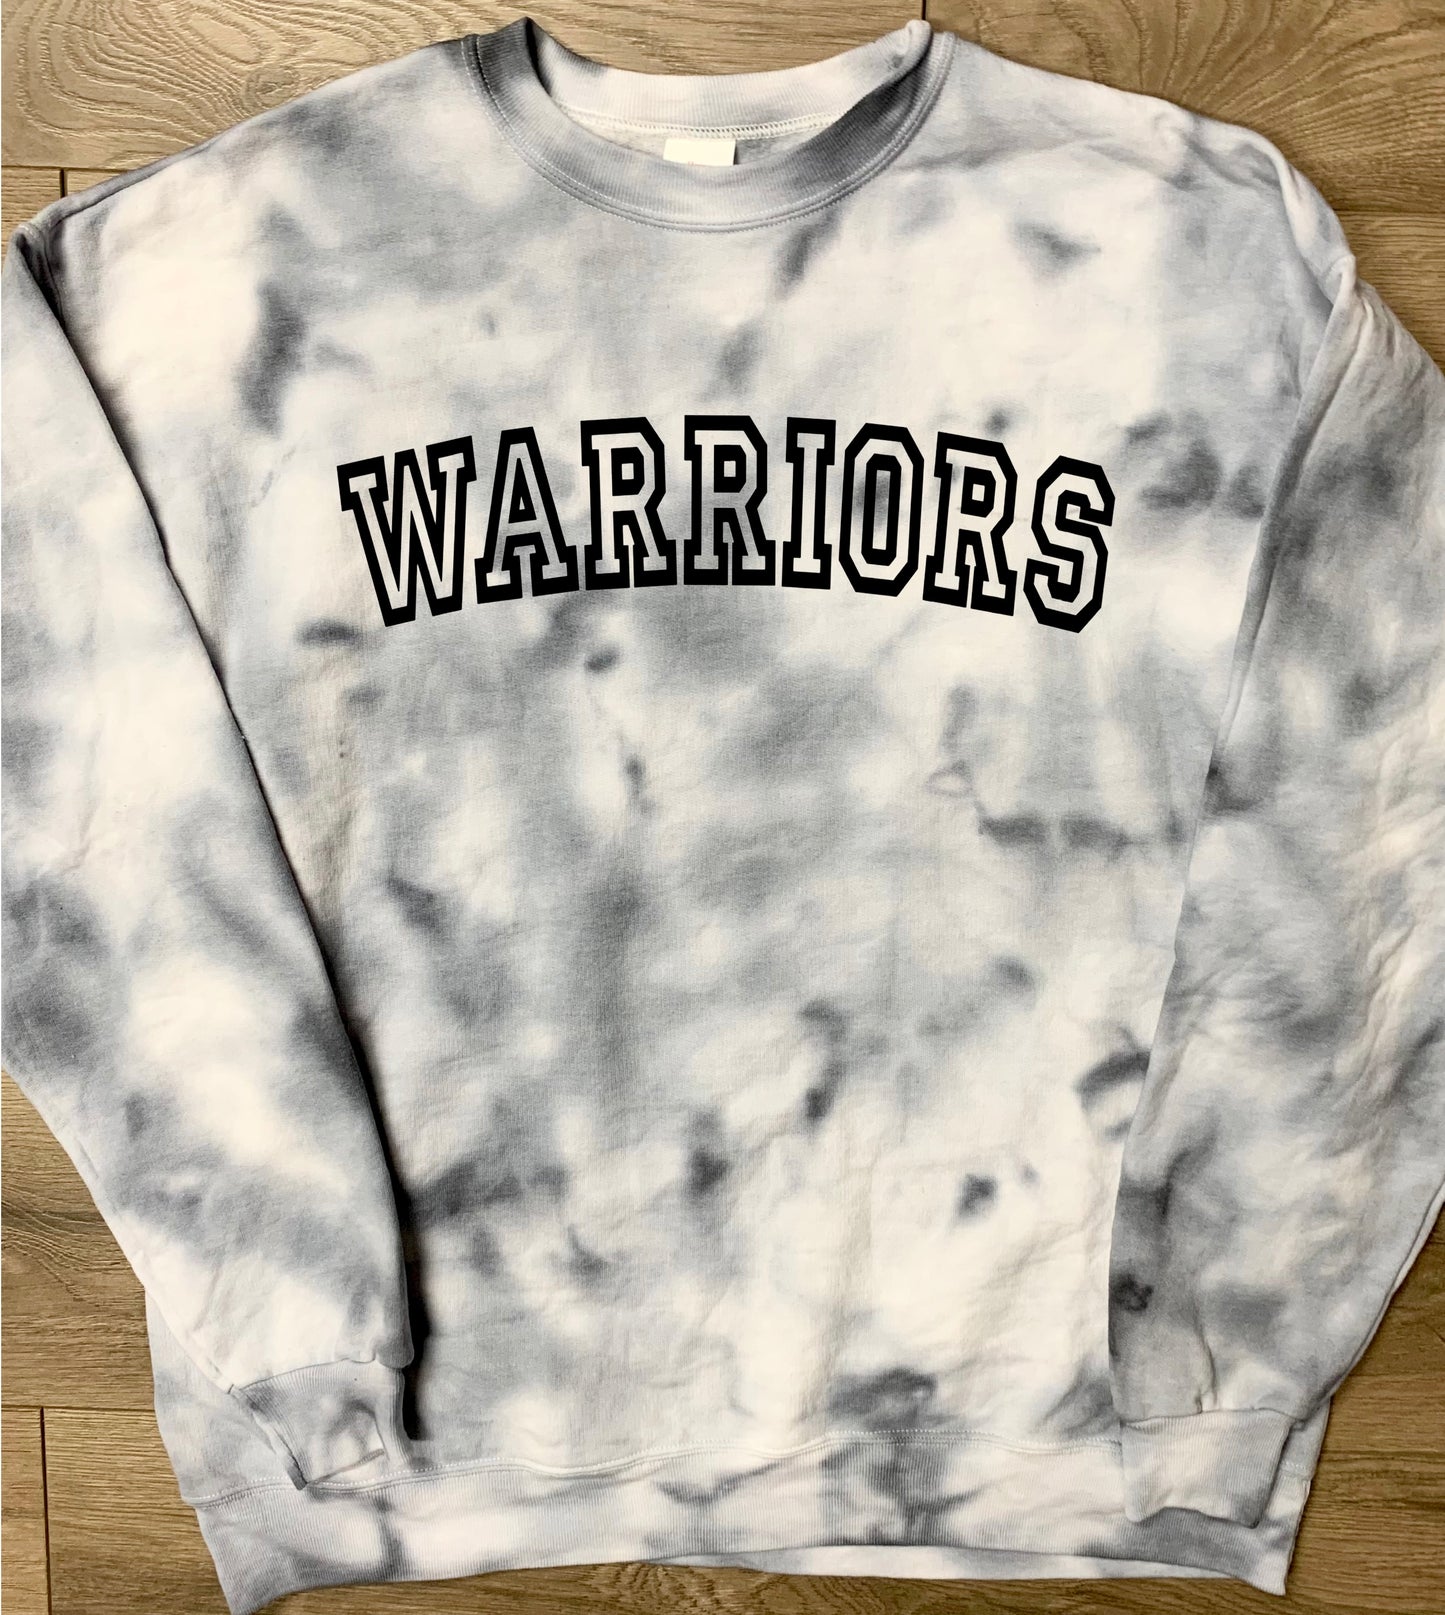 Hand-dyed Adult Watkins Warriors Gray Curved Block Warriors Tie Dye Crewneck Sweatshirt